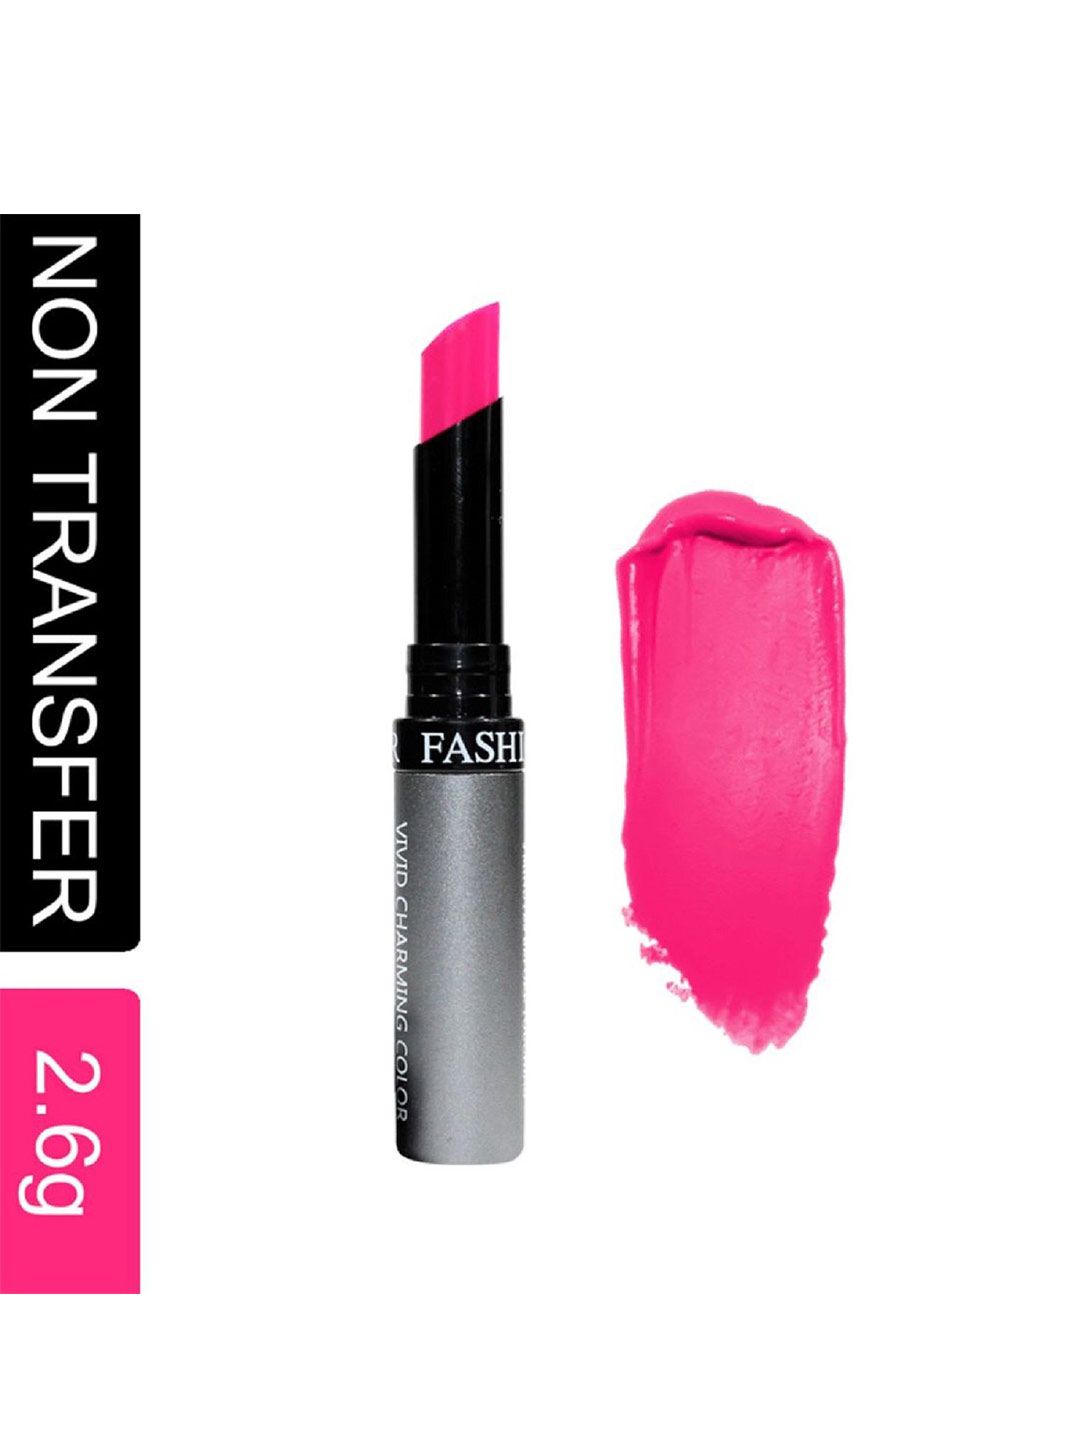 Fashion Colour Kiss Lip Vivid Charming Color No Transfer Lipstick - Rose Violet 67 Price in India